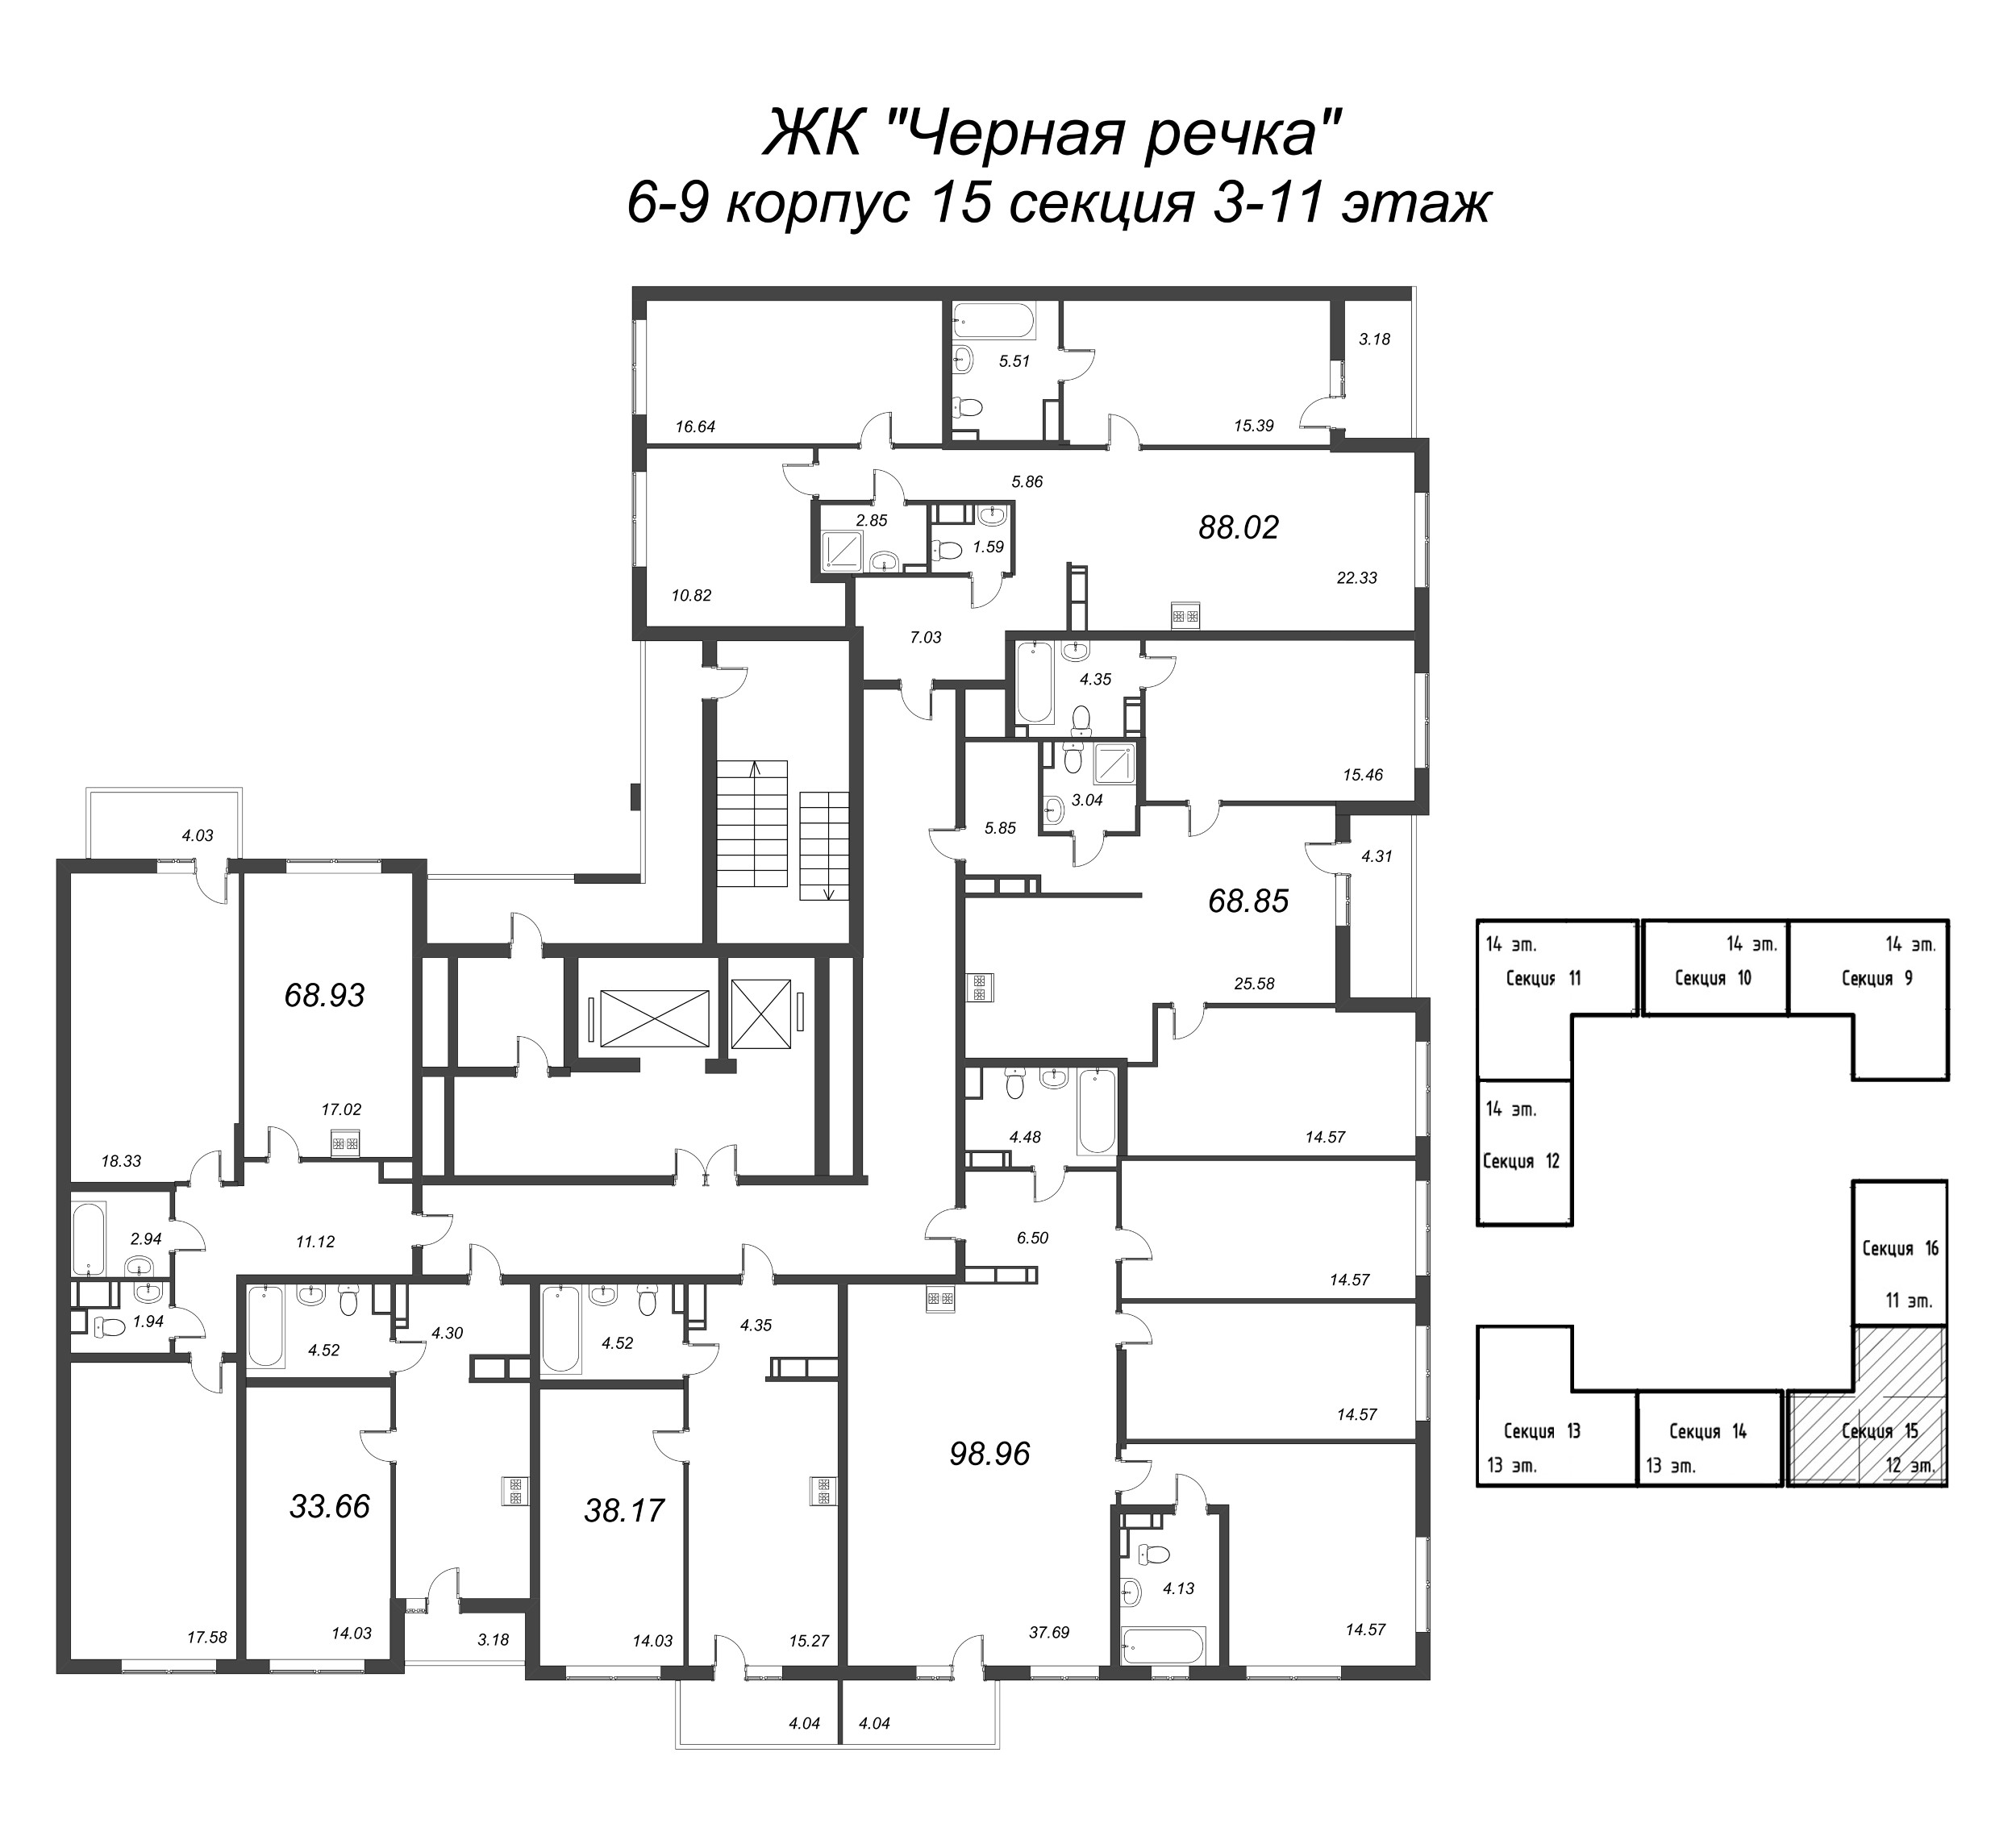 4-комнатная (Евро) квартира, 88.02 м² - планировка этажа